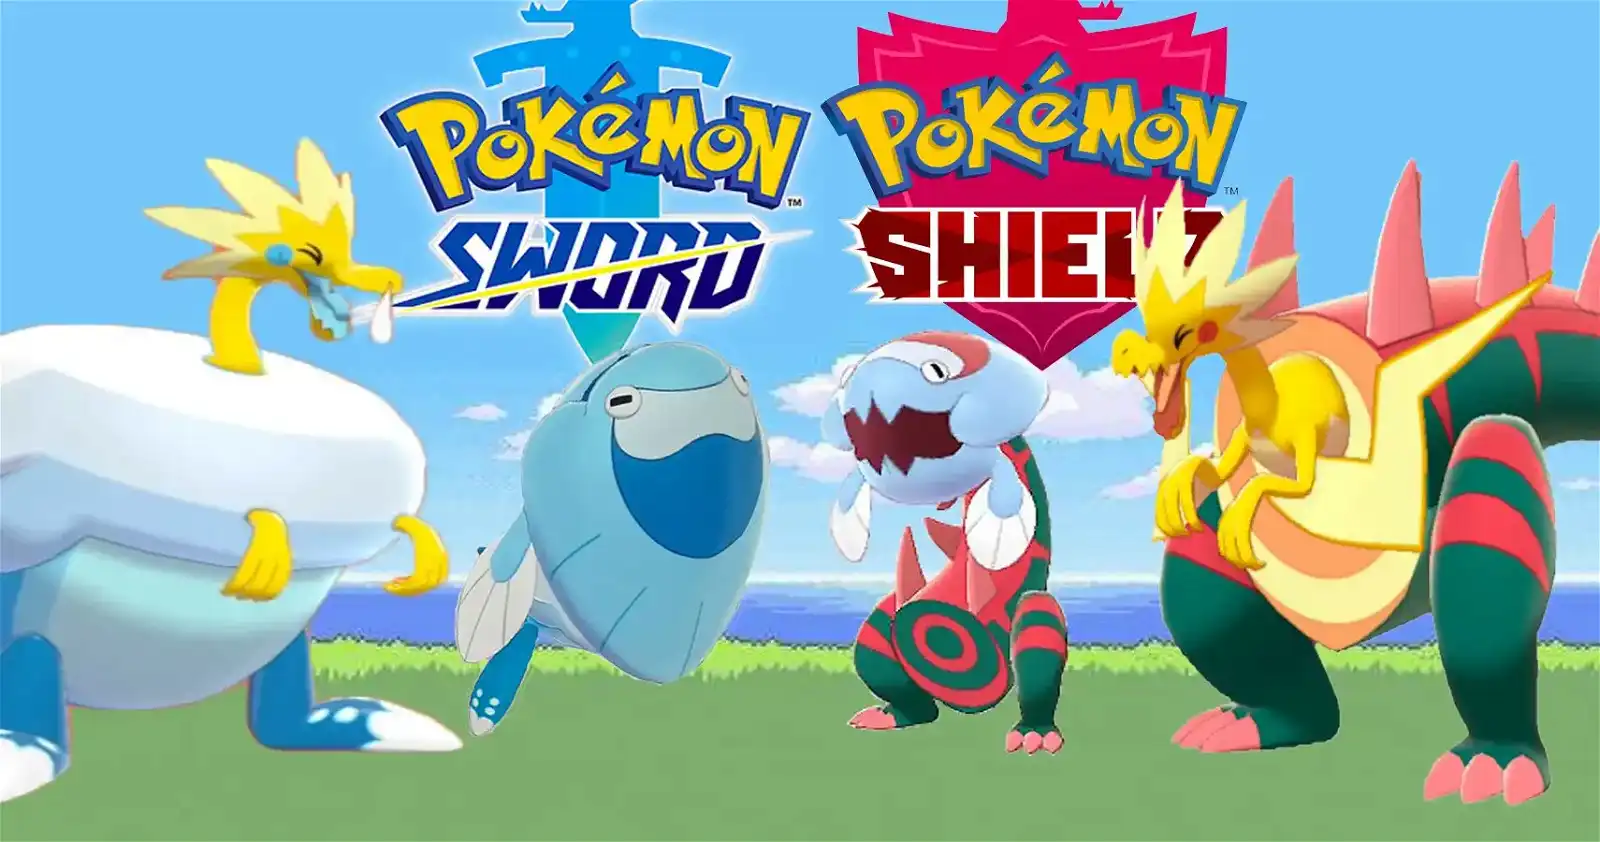 Pokémon Sword And Shield: Fossil Pokémon Guide